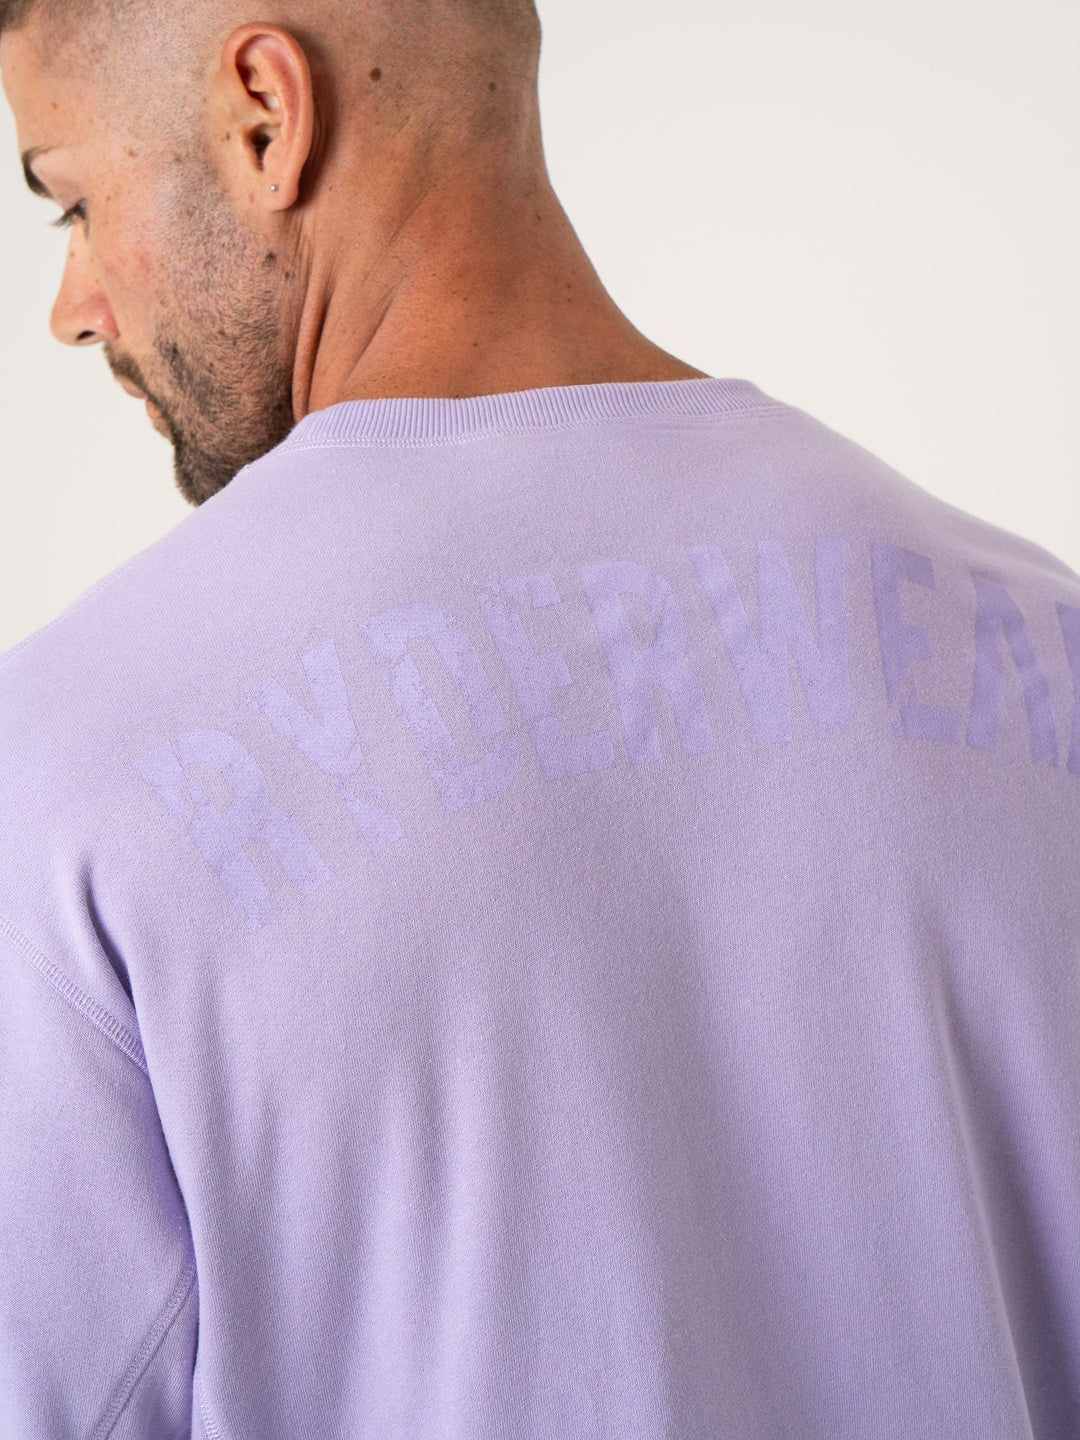 Force Crew Neck - Purple Clothing Ryderwear 